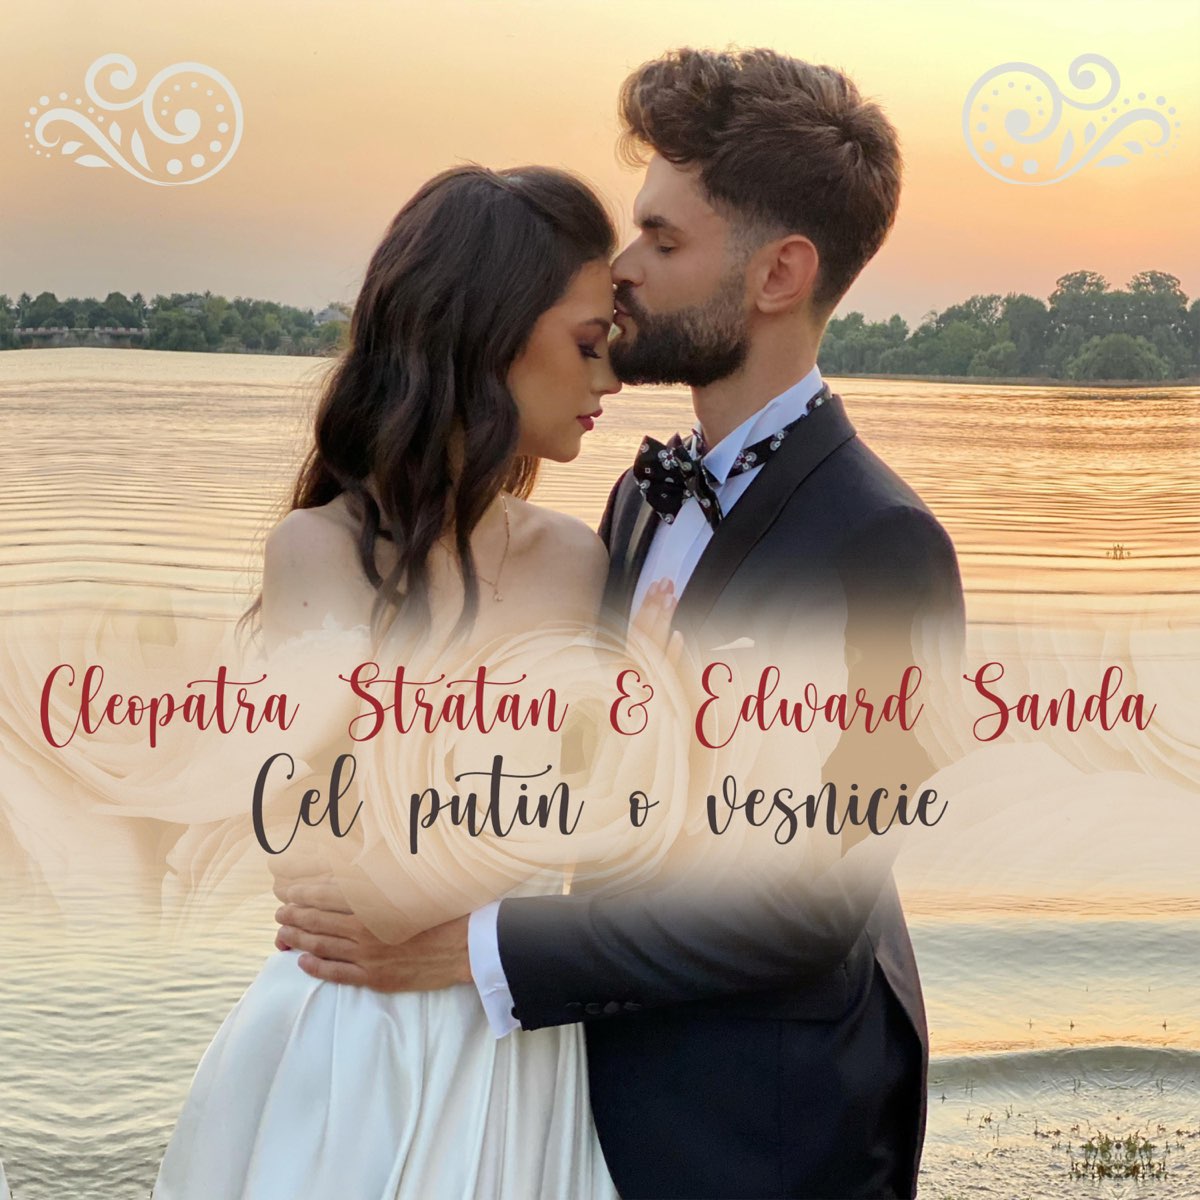 Cel putin o veșnicie (feat. Edward Sanda) - Single by Cleopatra Stratan on  Apple Music